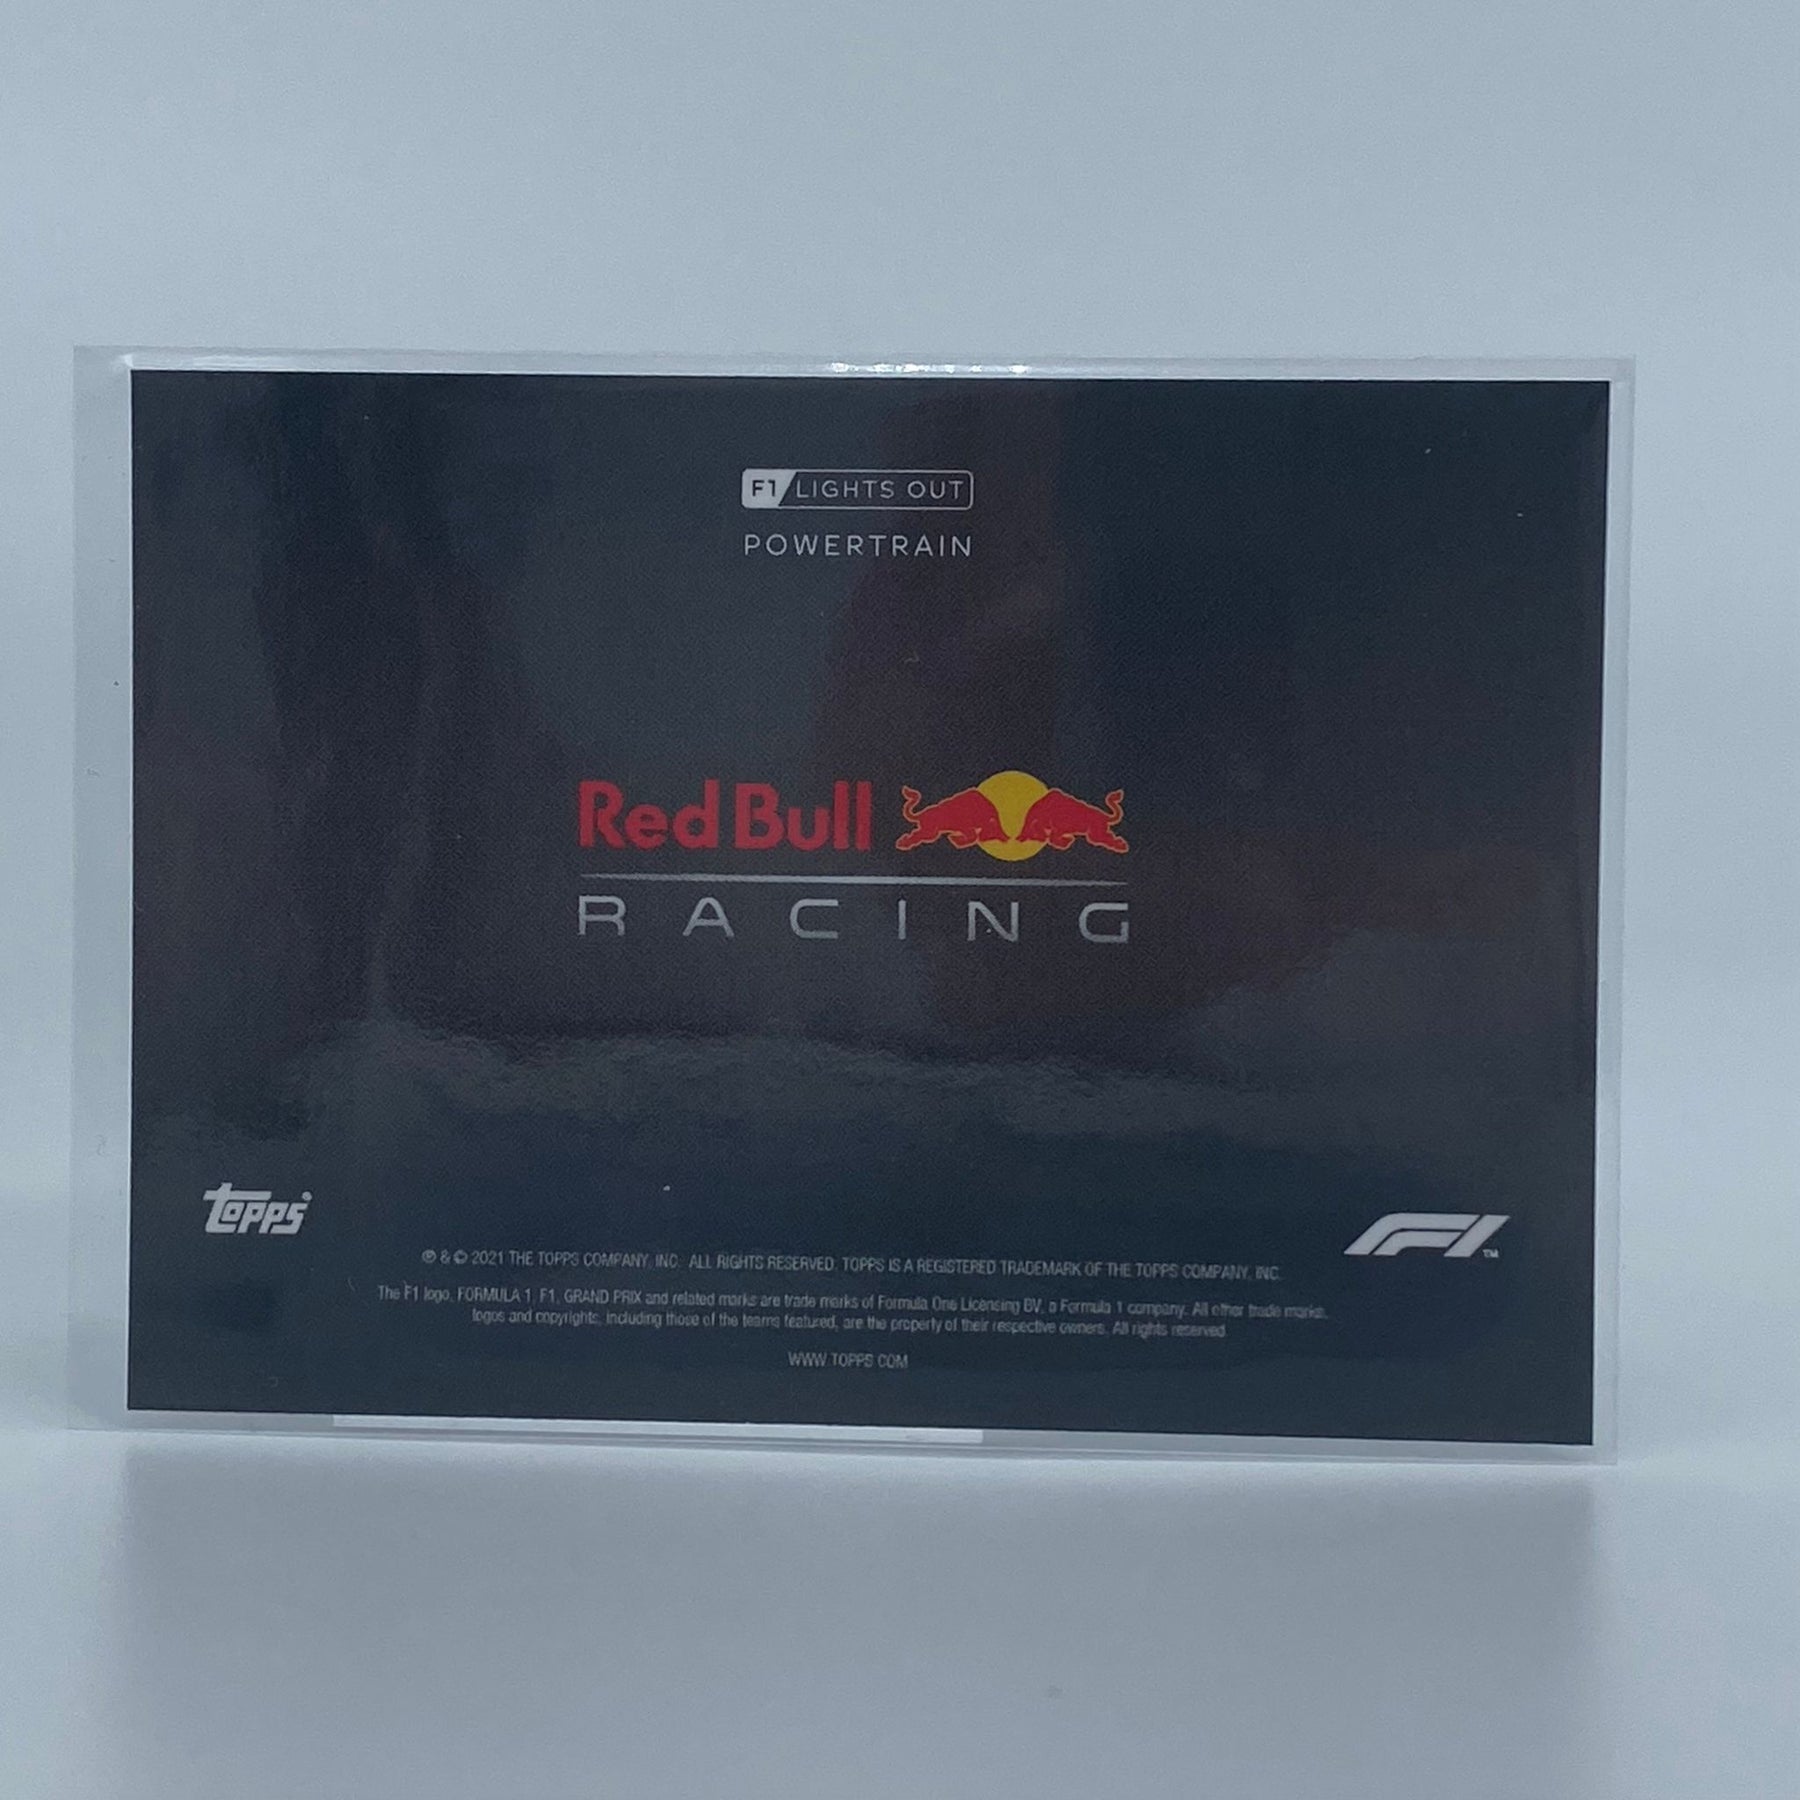 Honda Red Bull Racing Sticker Sheet